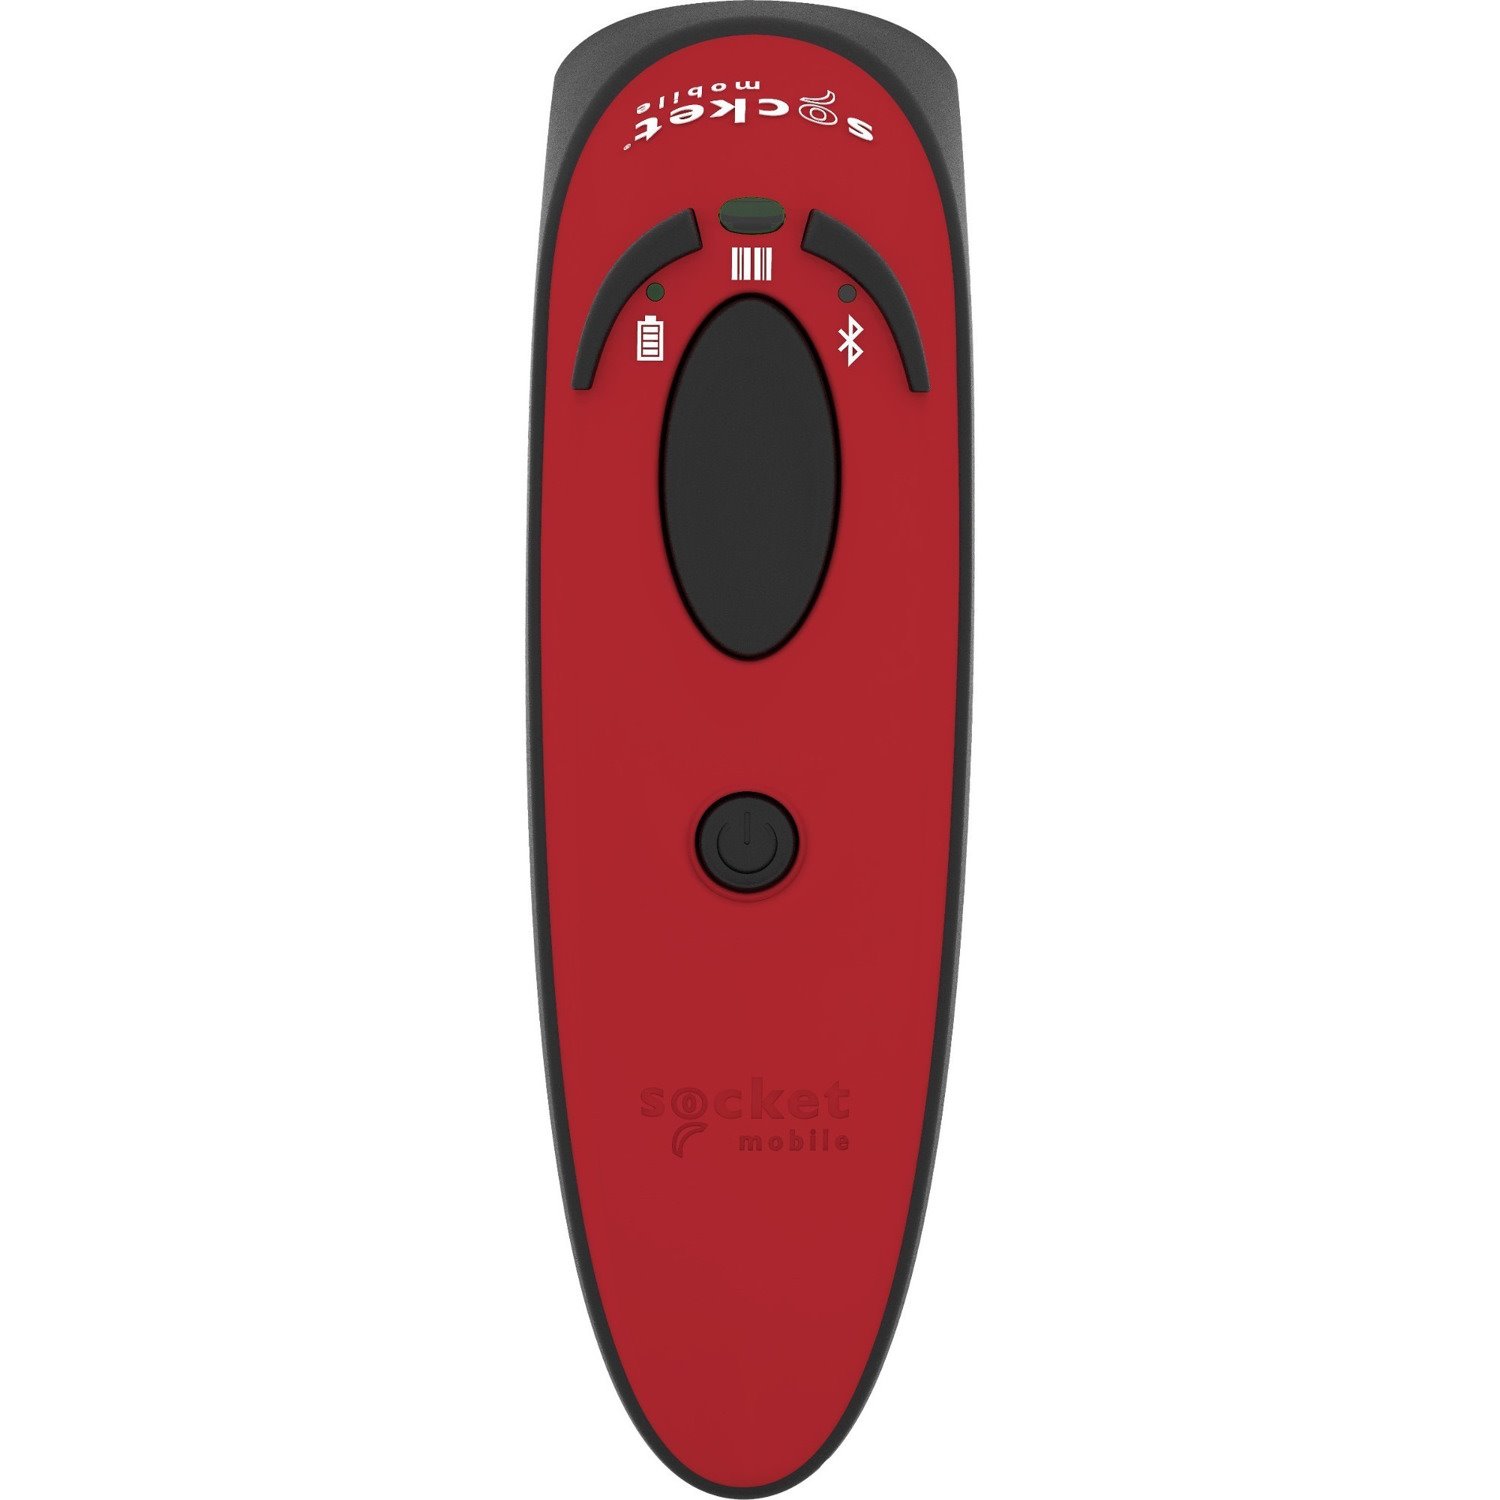 Socket Mobile DuraScan D740 Handheld Barcode Scanner - Wireless Connectivity - Red